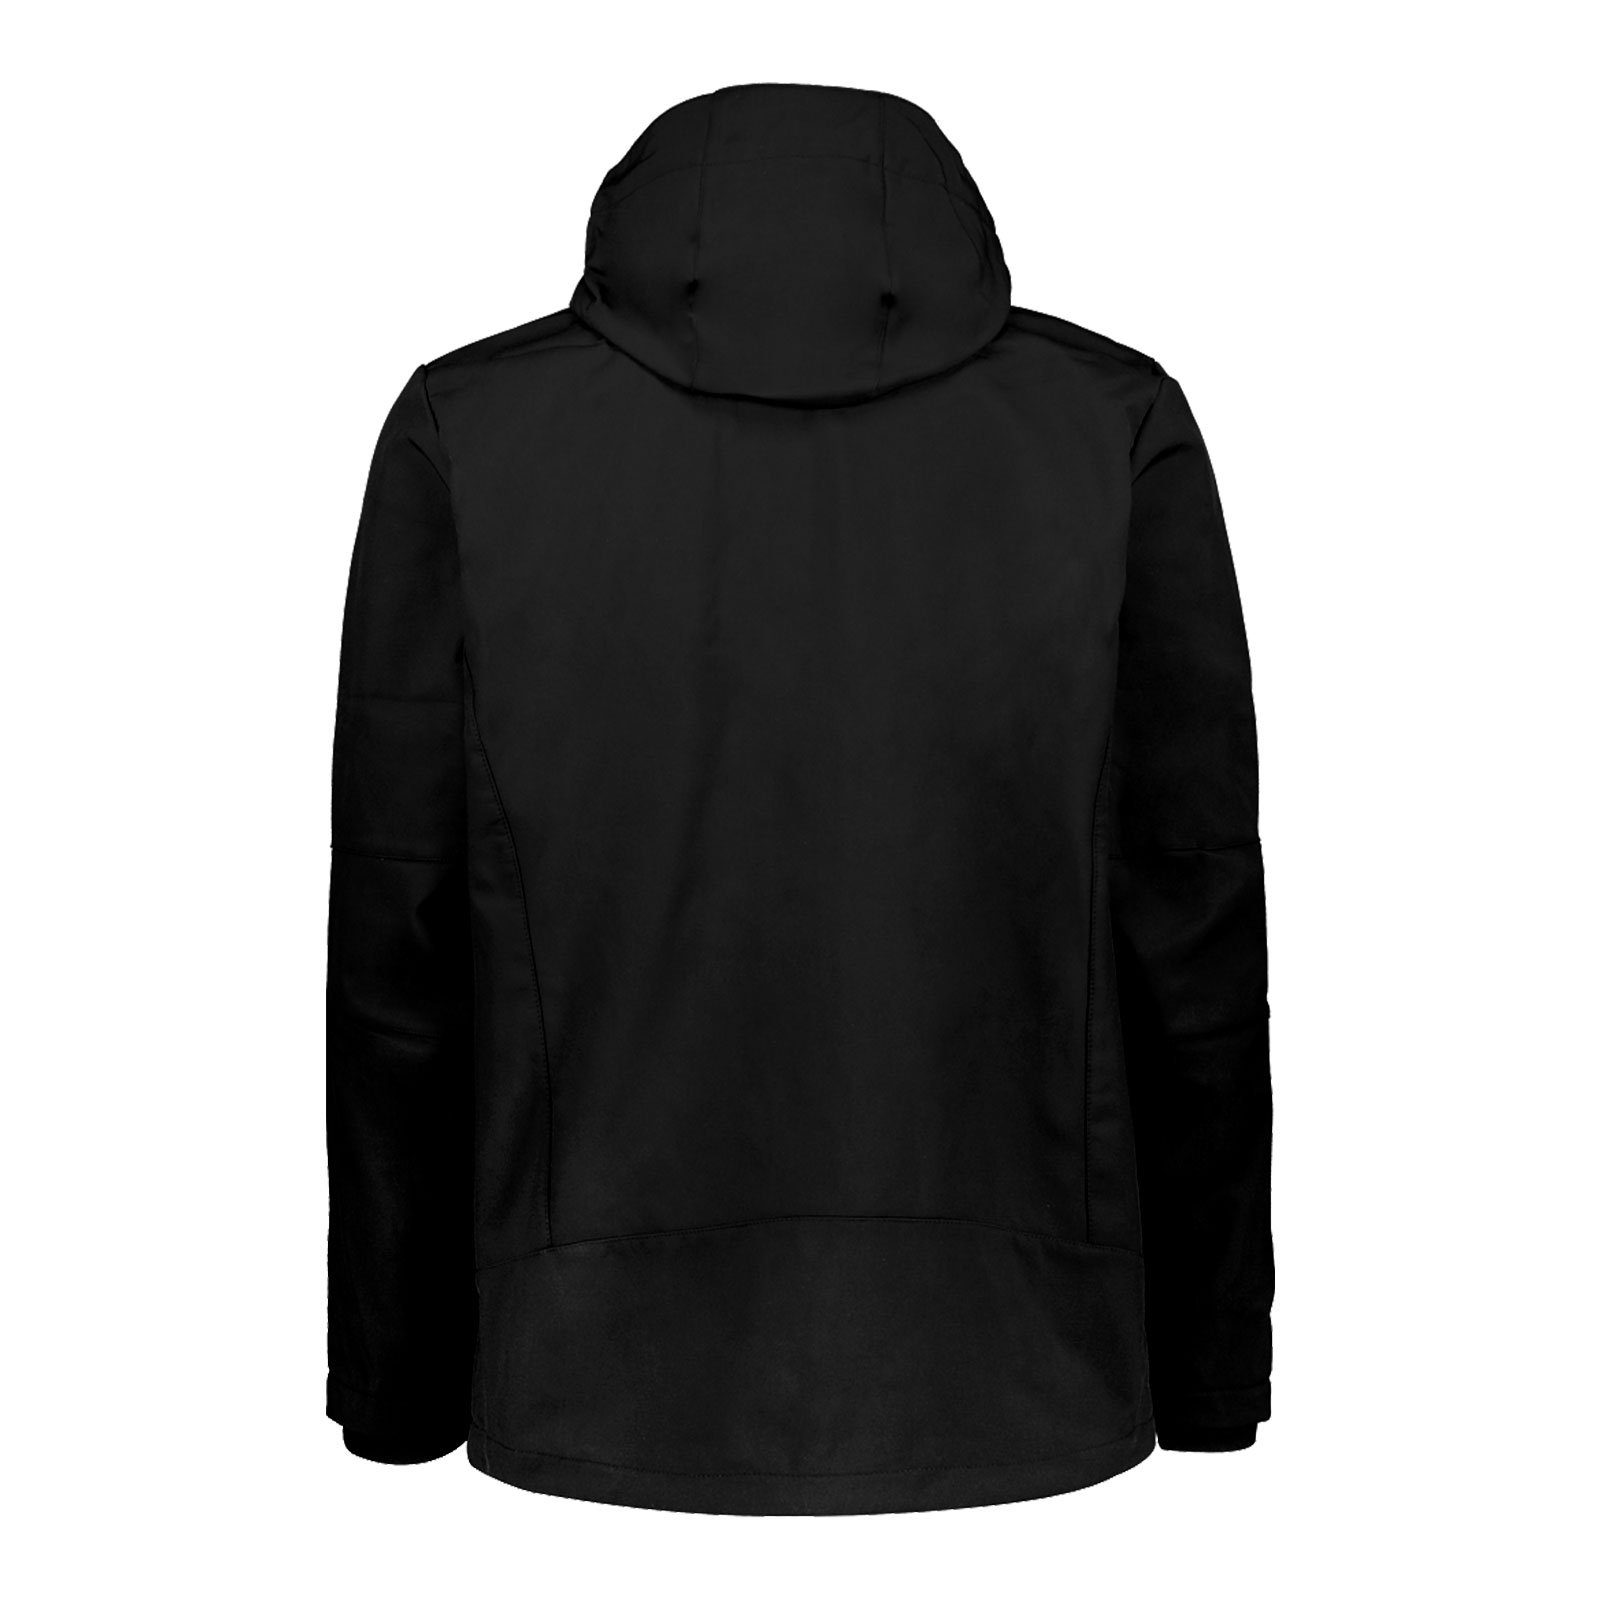 Hood CMP Softshelljacke mit Kapuze Jacket Zip Man black abnehmbarer U901